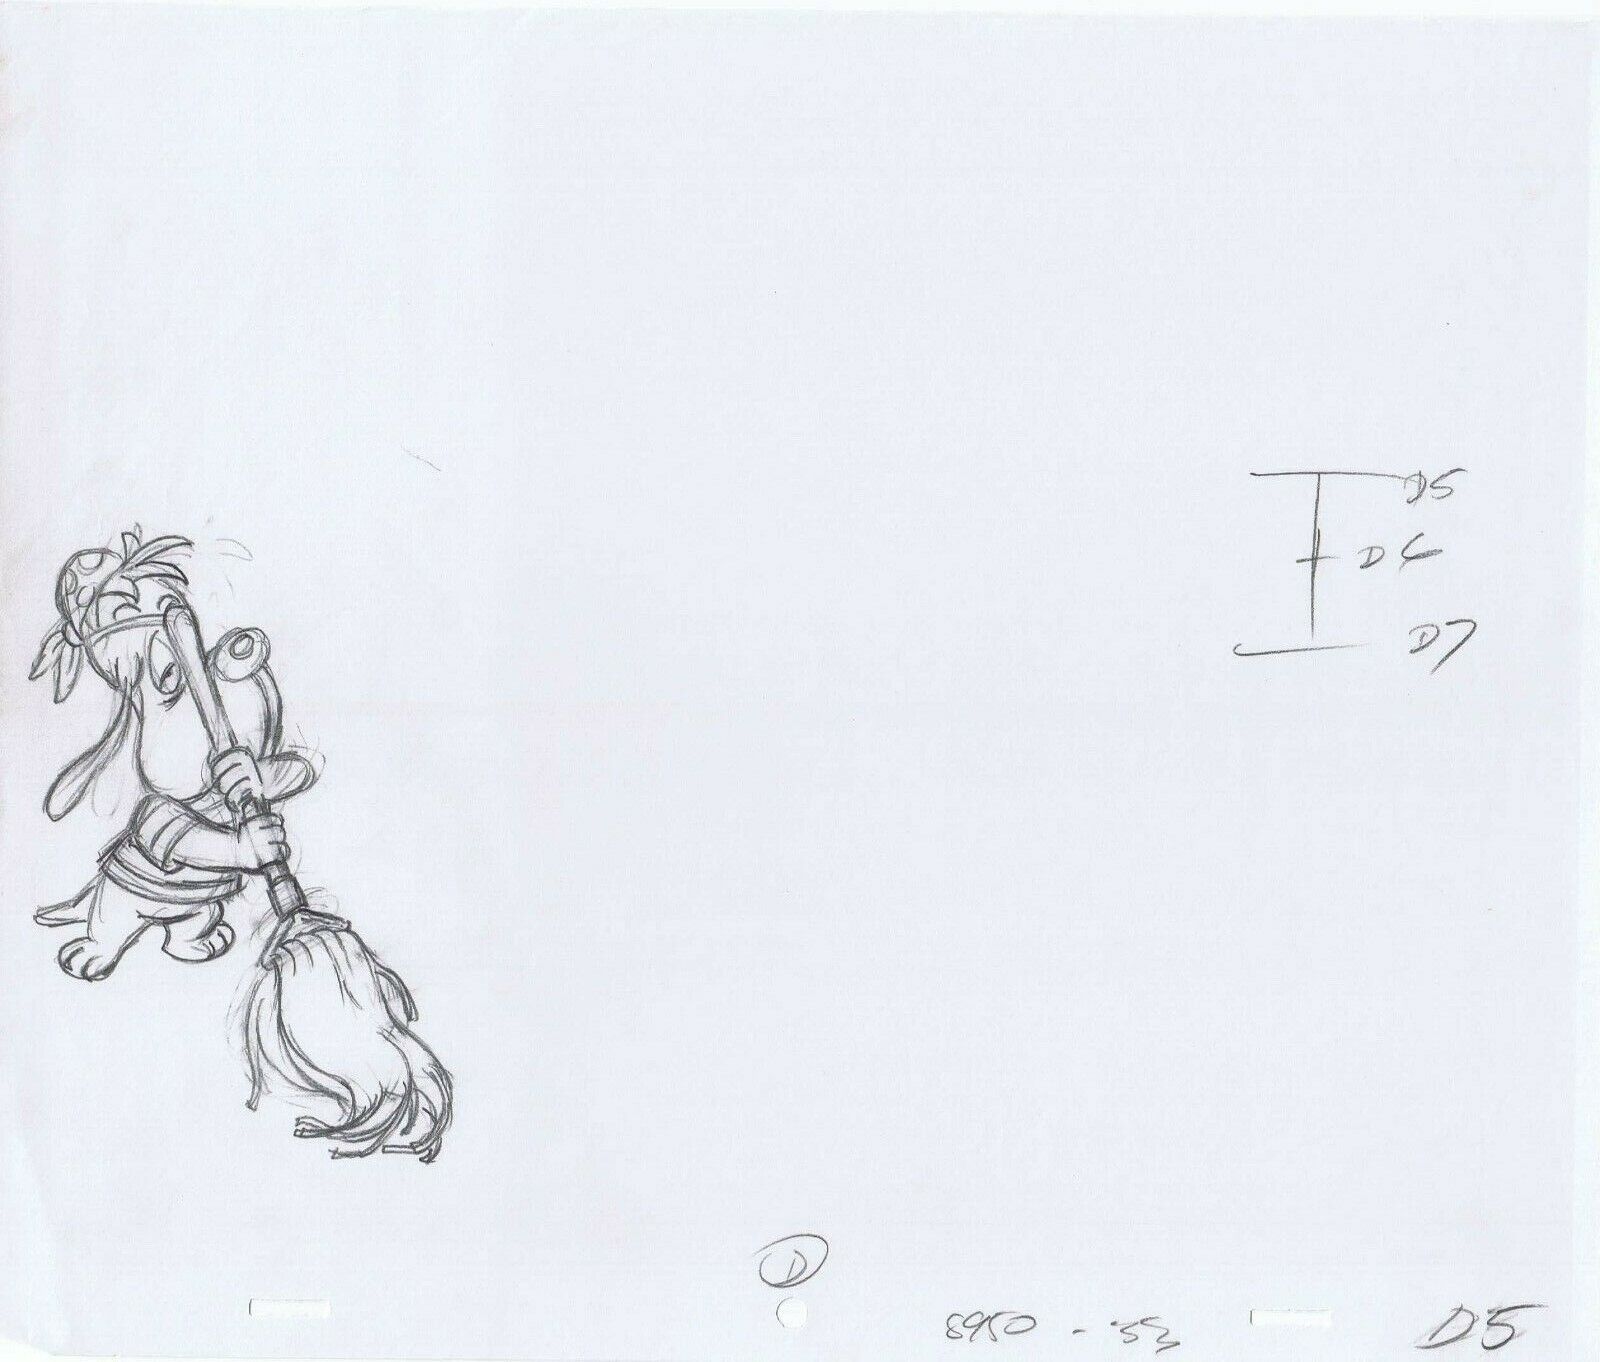 Droopy Original Art Production Animation Pencils 8950 - 33 D - 5